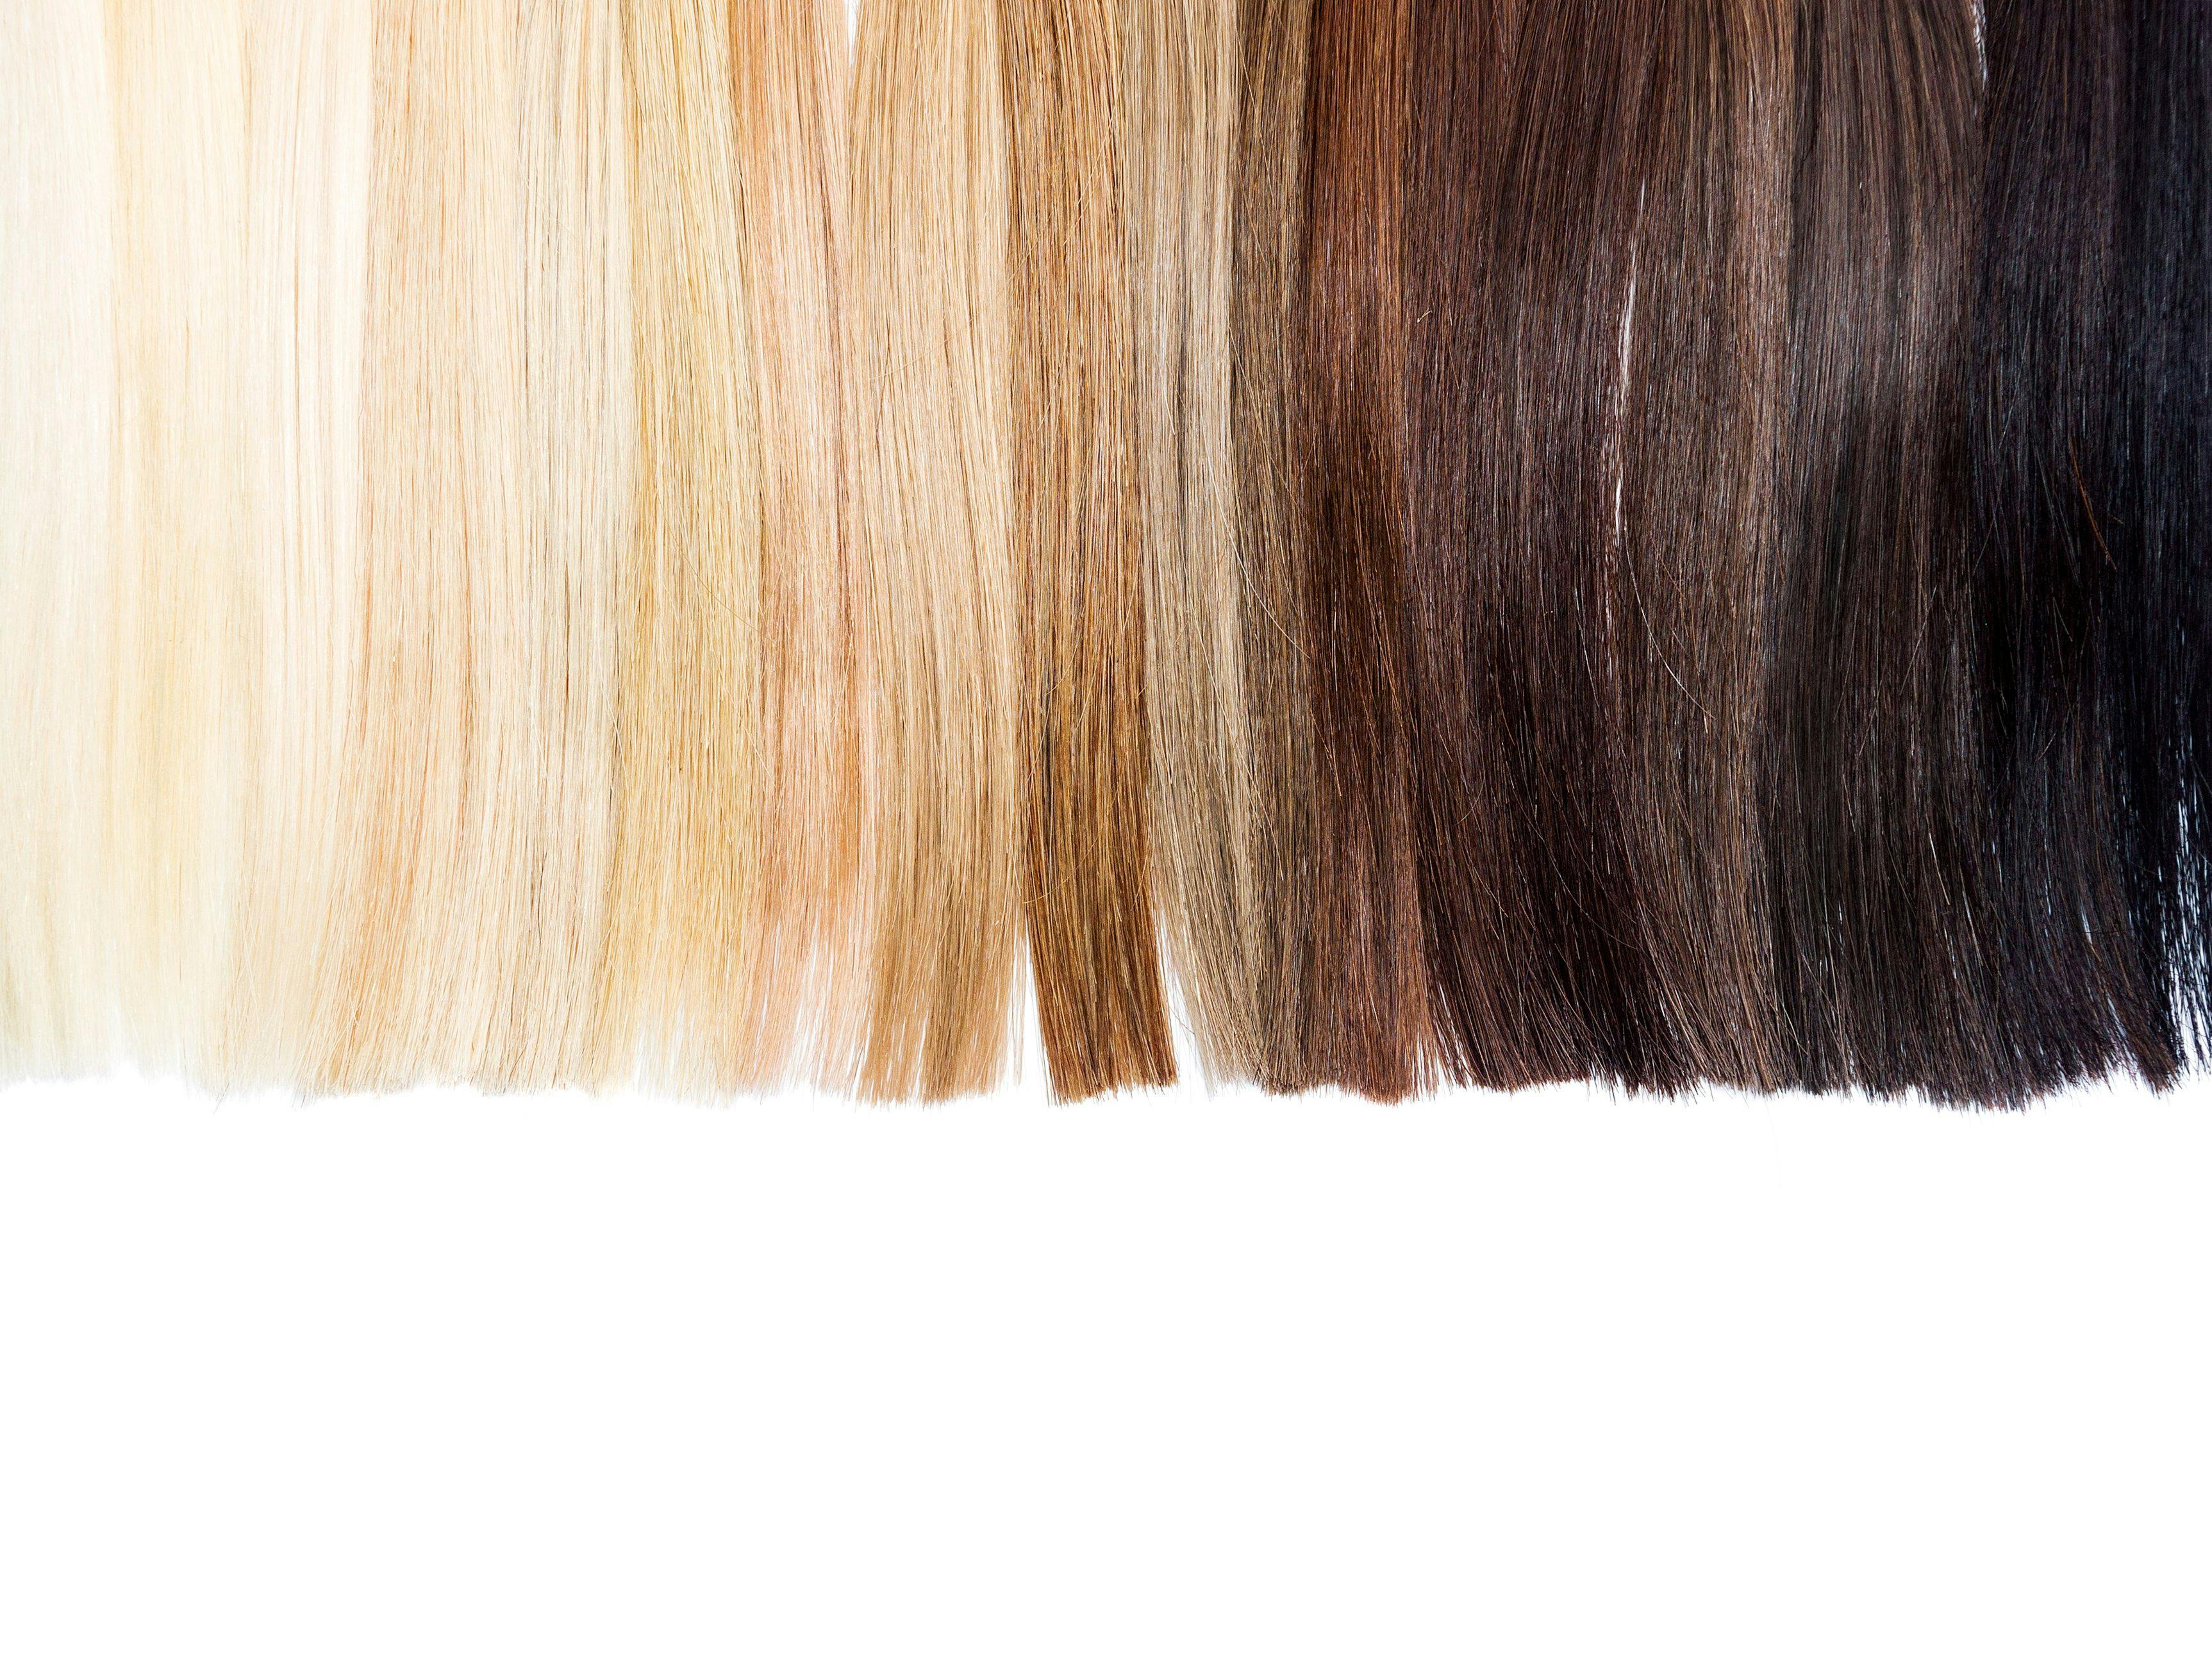 Hair Color Spectrum | image credit: Elvira - stock.adobe.com